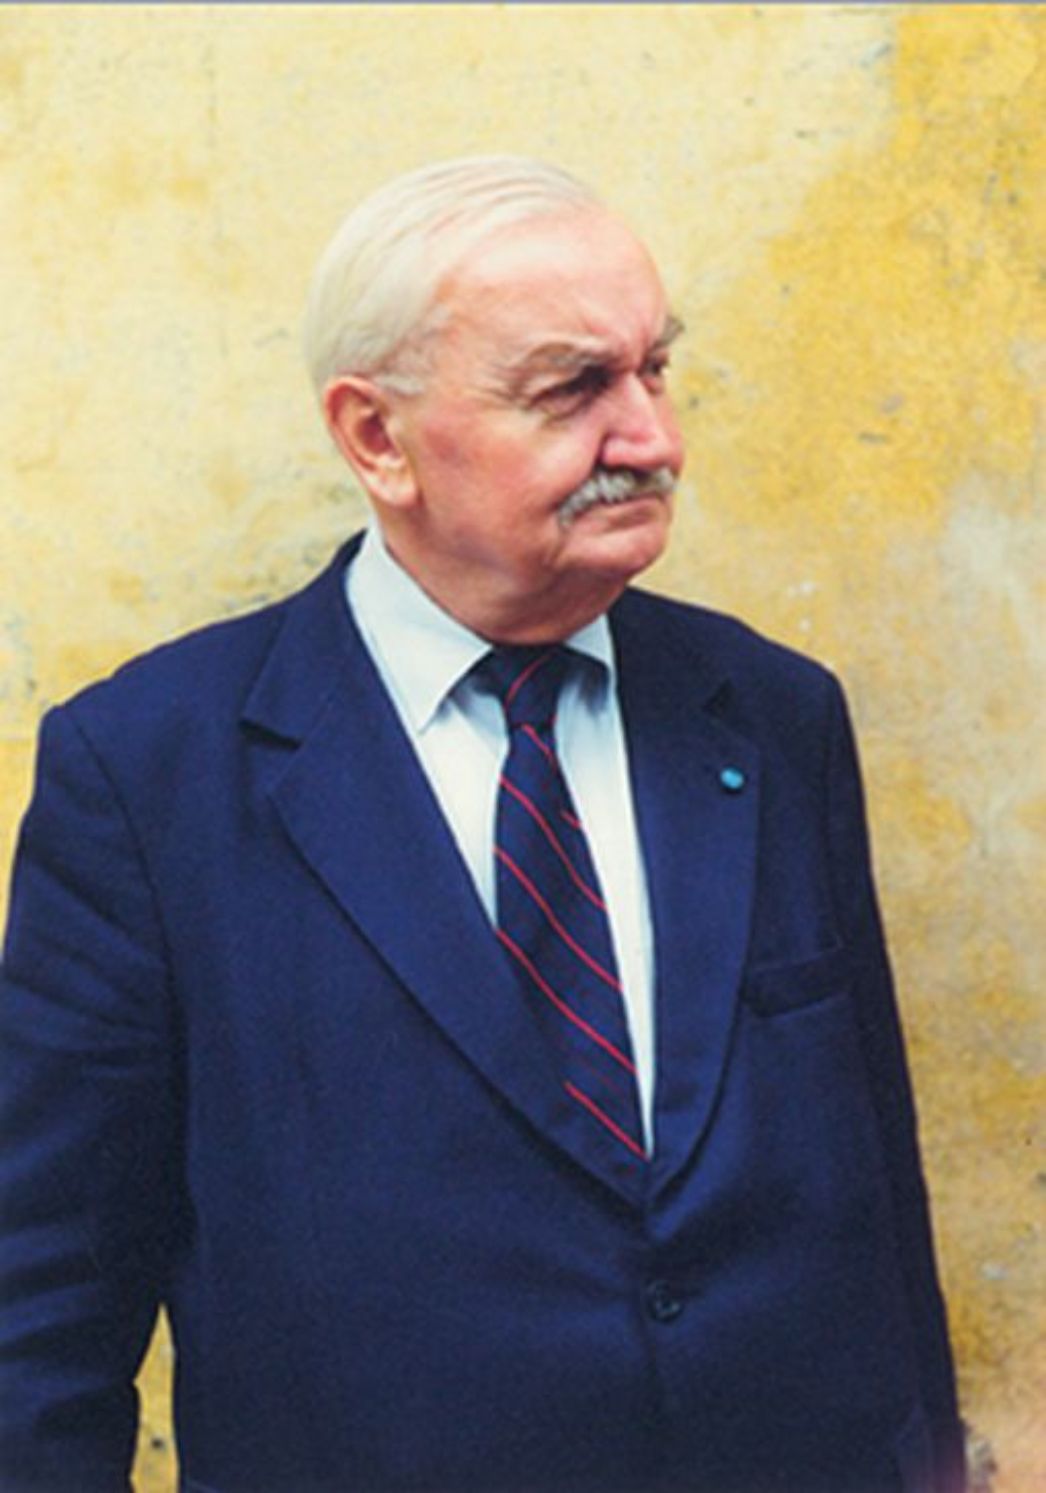 Portrait photograph of Hugo Rokyta